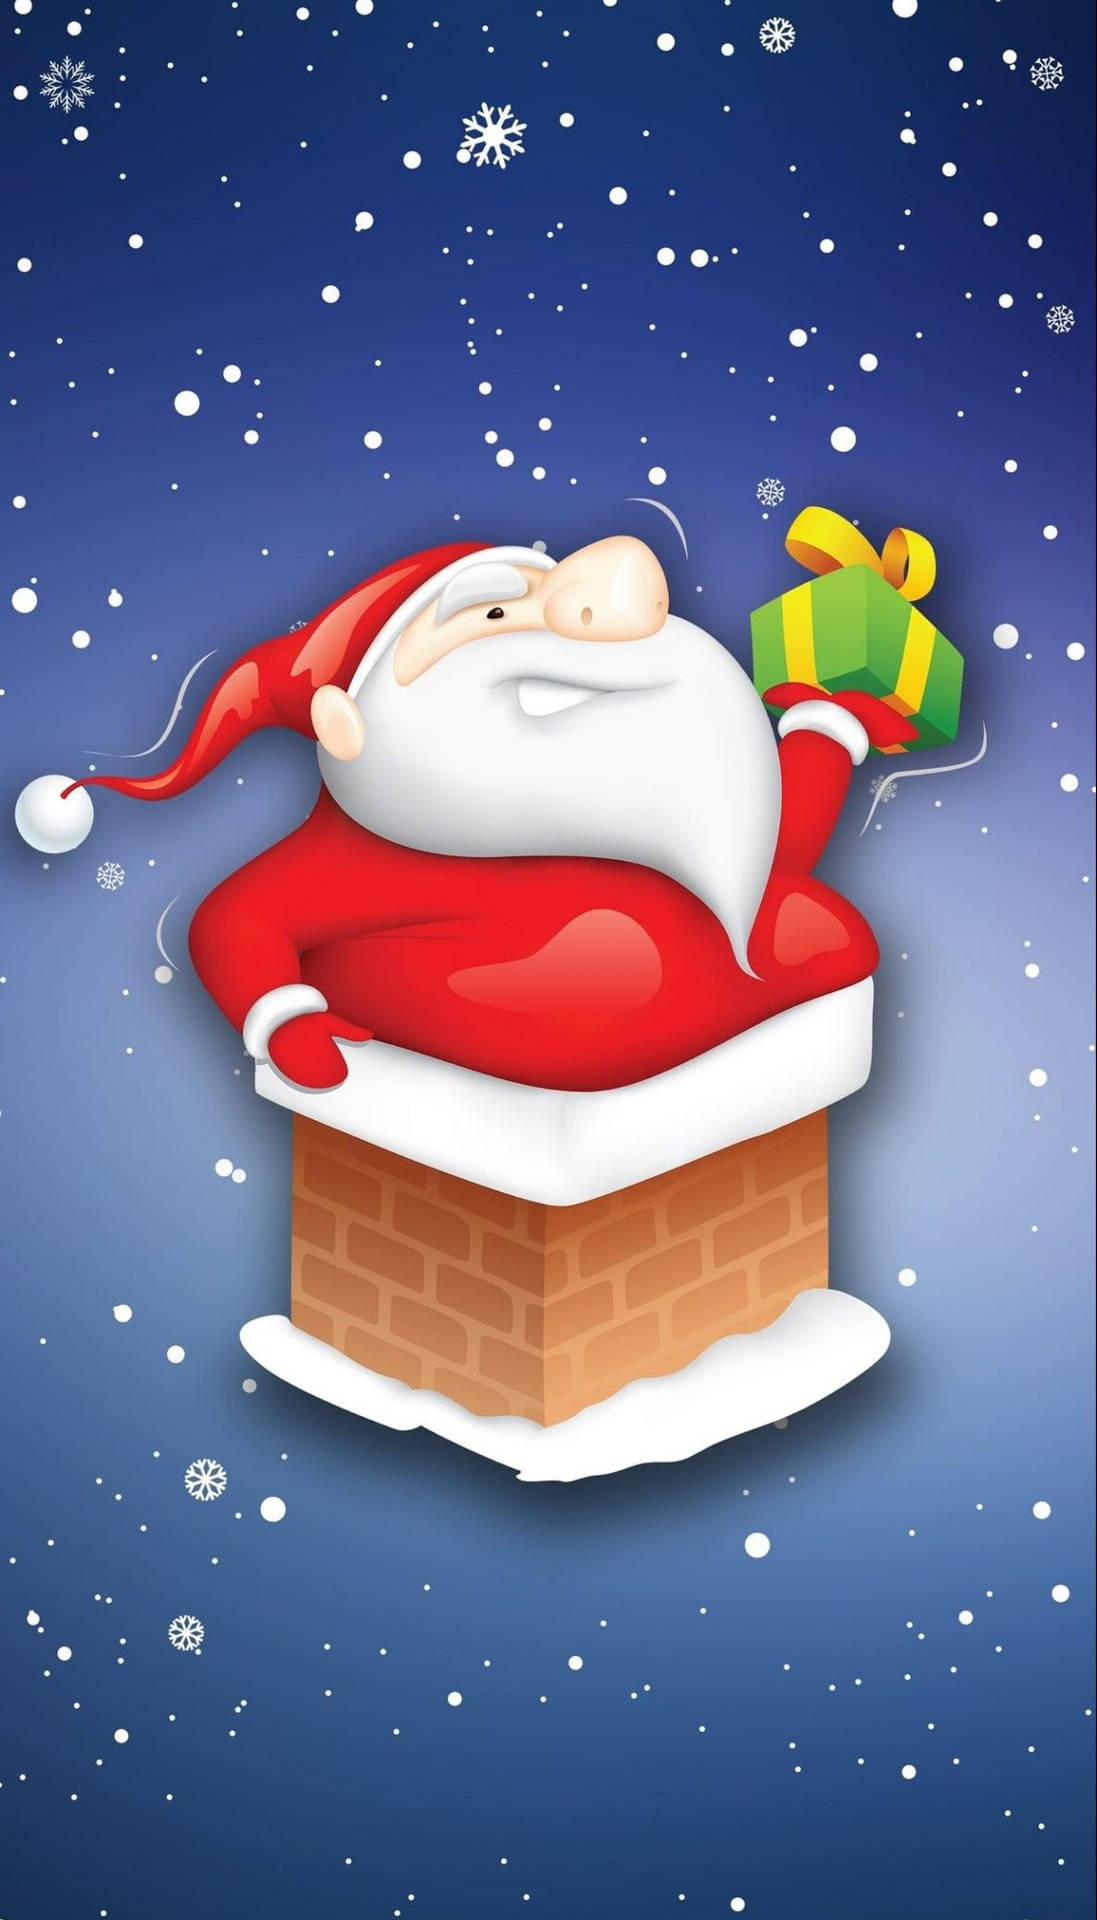 Santa Claus Winter iPhone Wallpaper